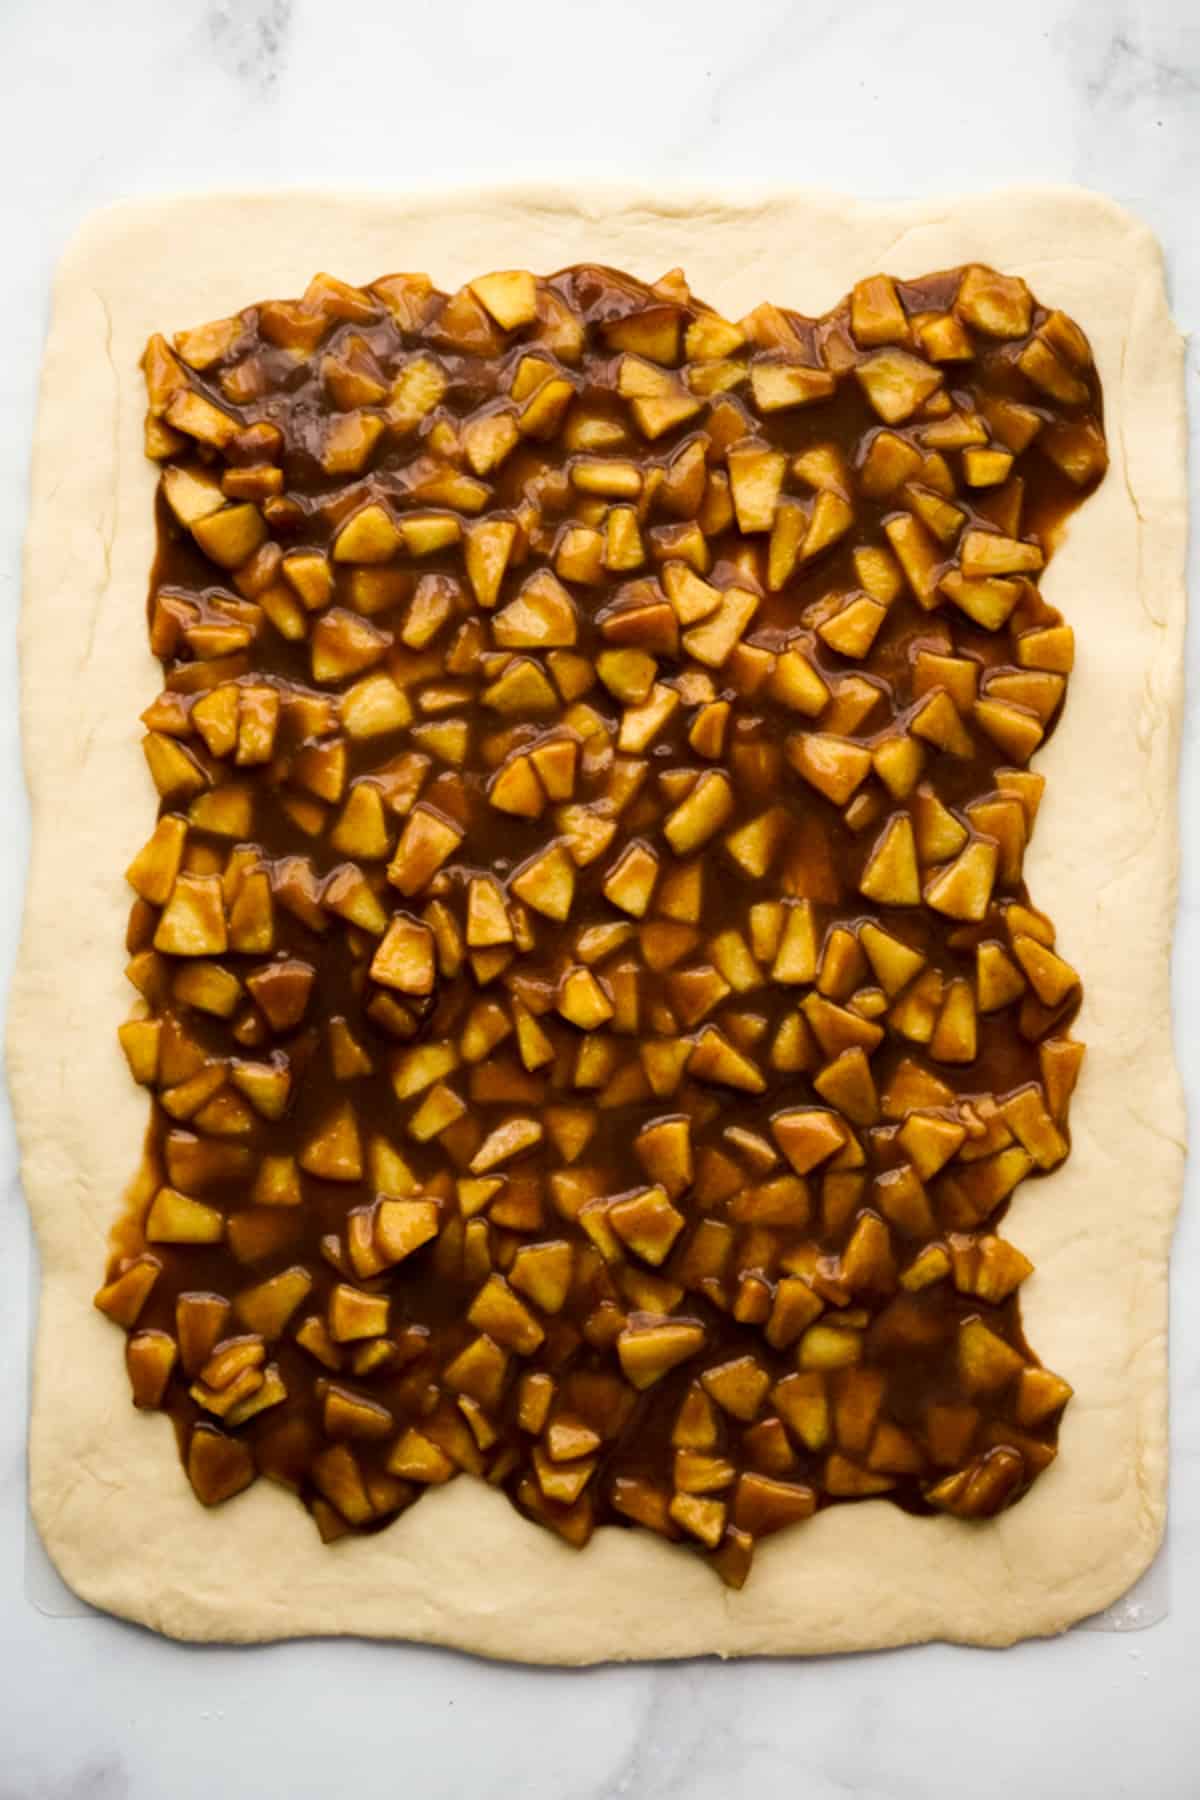 Apple pie filling on a flattened dough